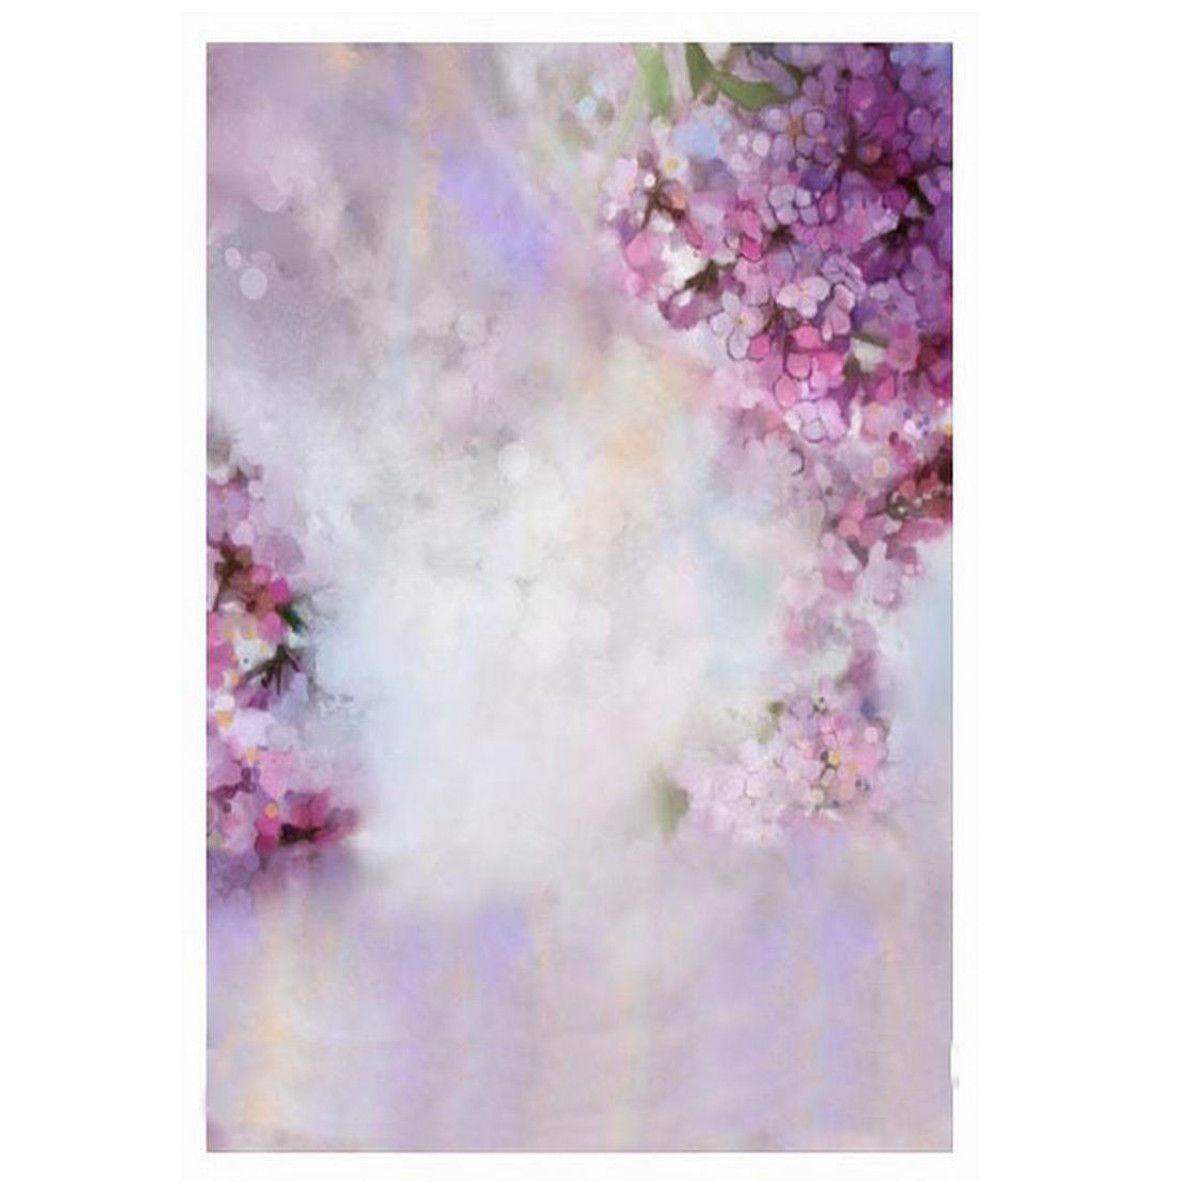 5x7ft-Vinyl-Dreamlike-Purple-Flowers-Photography-Backgrounds-Photo-Shoot-Backdrop-1152948